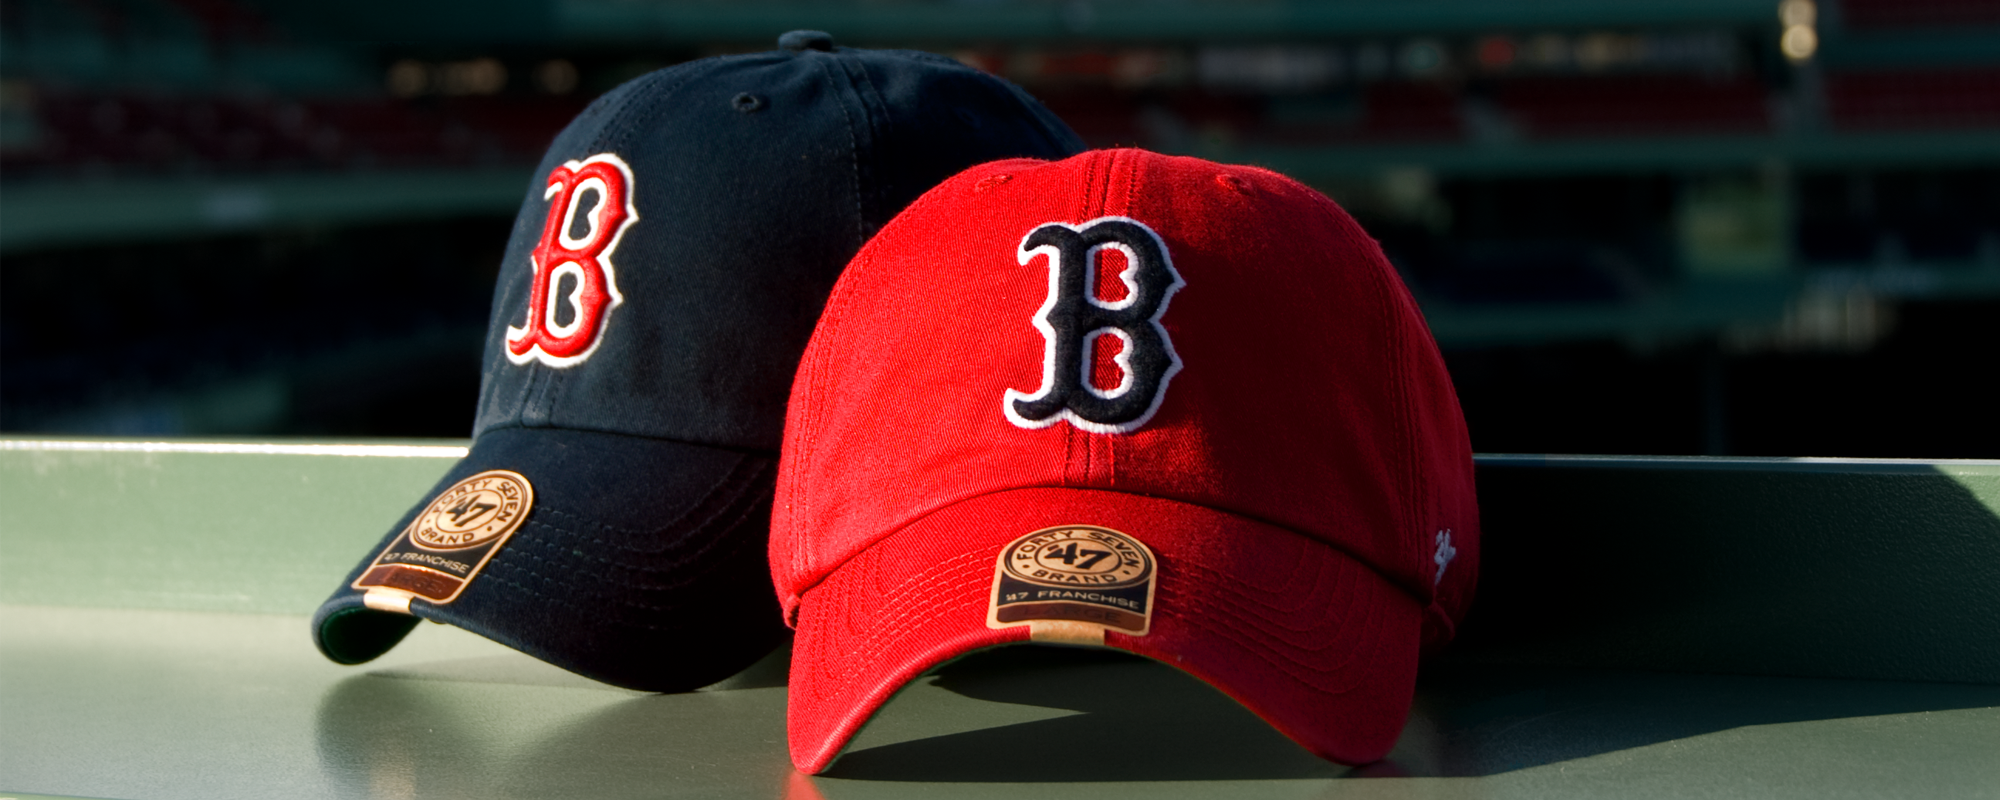 47 Brand Boston Red Sox Hat Magenta